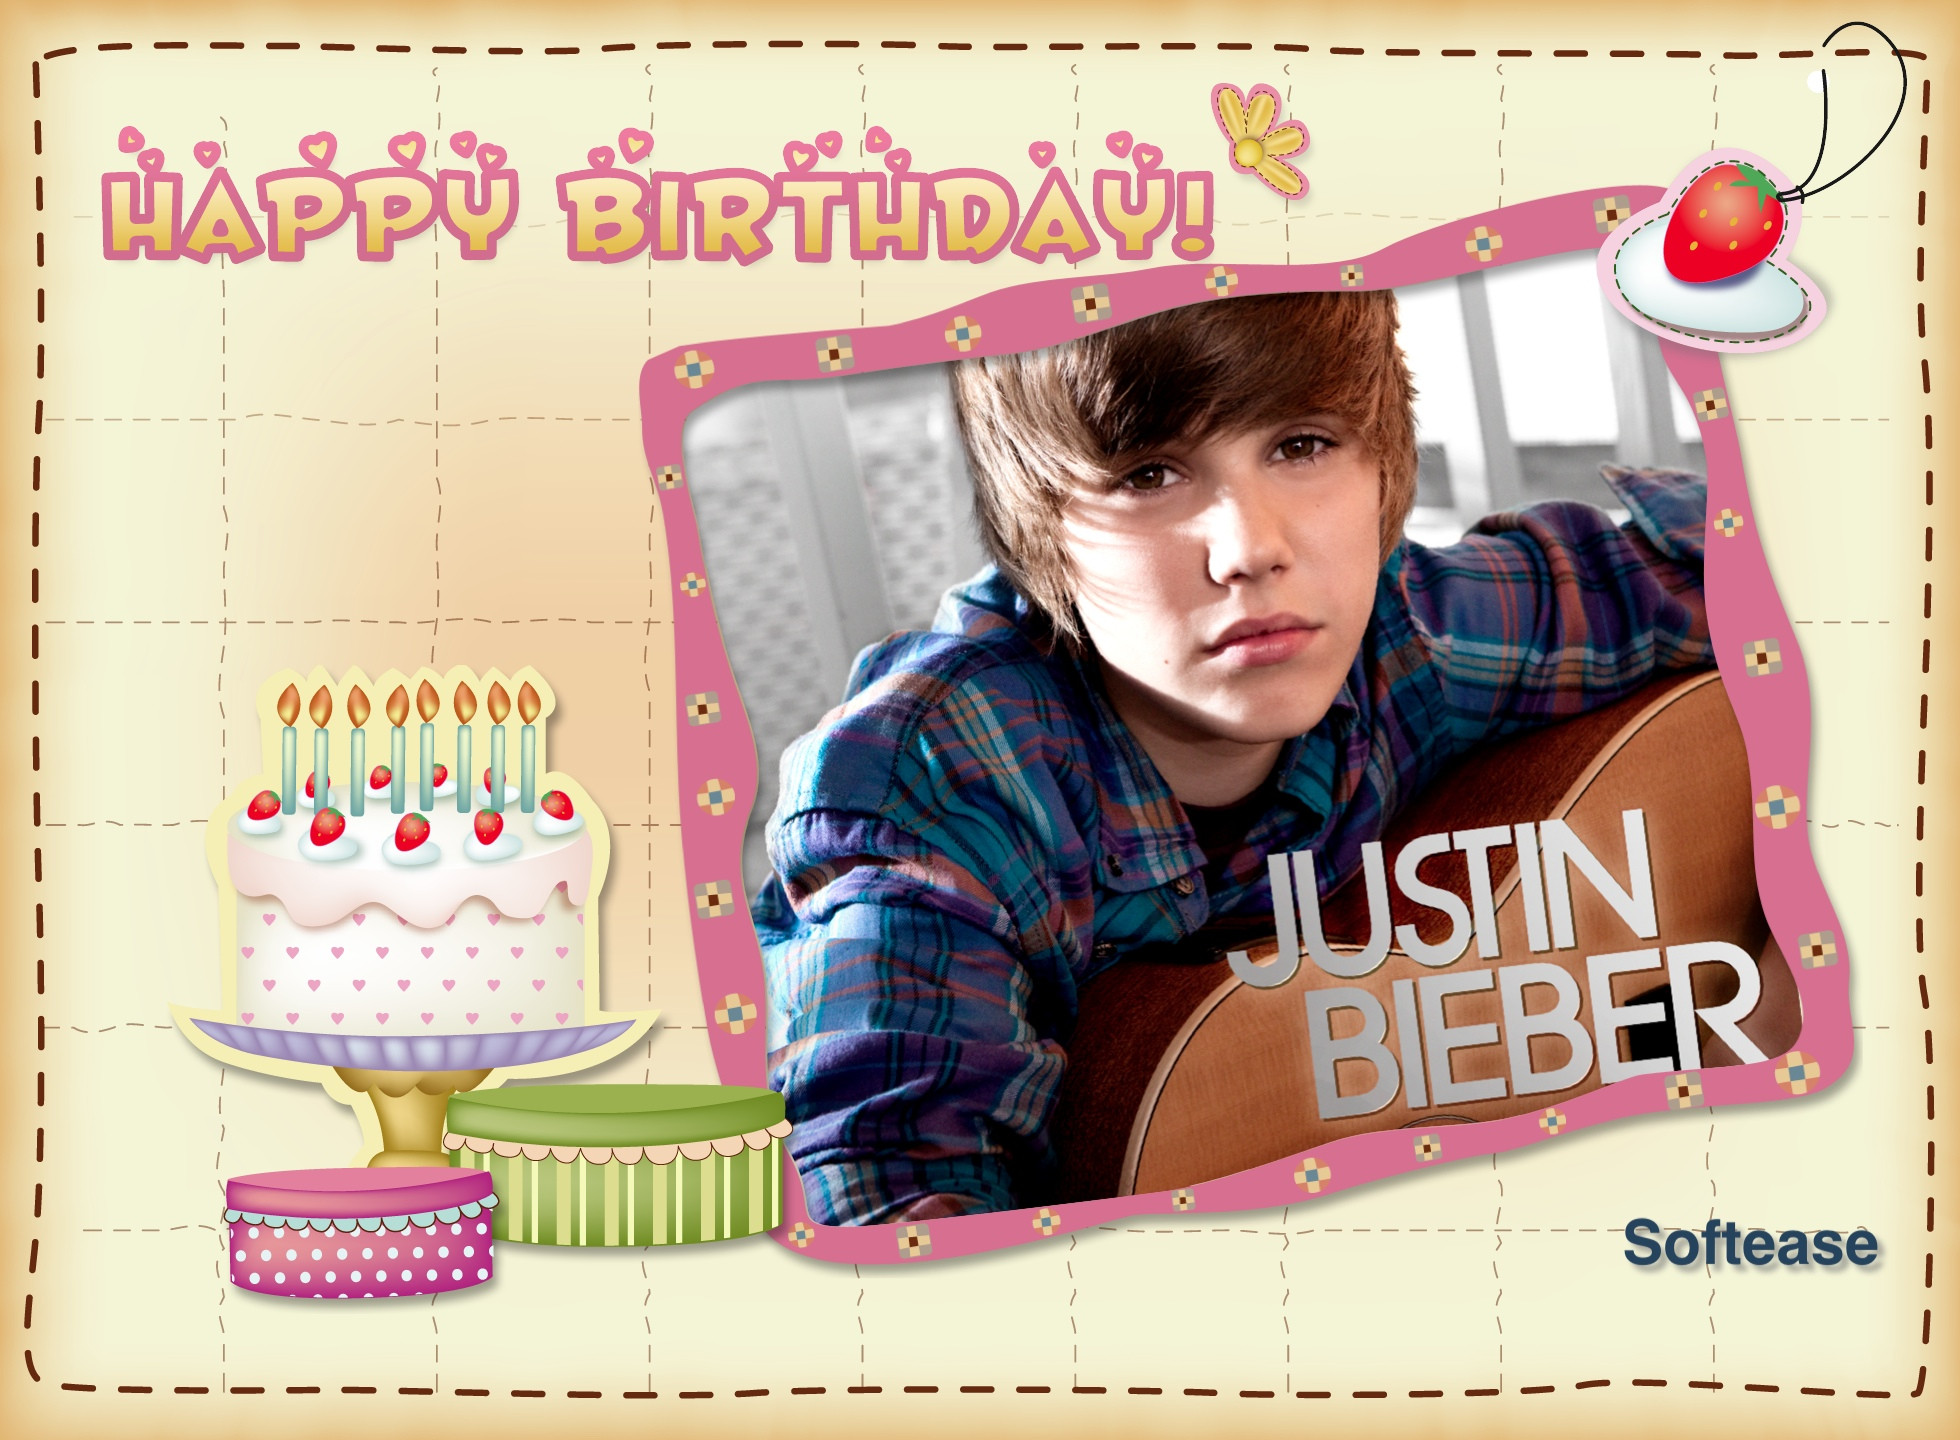 Justin Bieber Birthday Card
 Giant star – Justin Bieber His birthday is ing